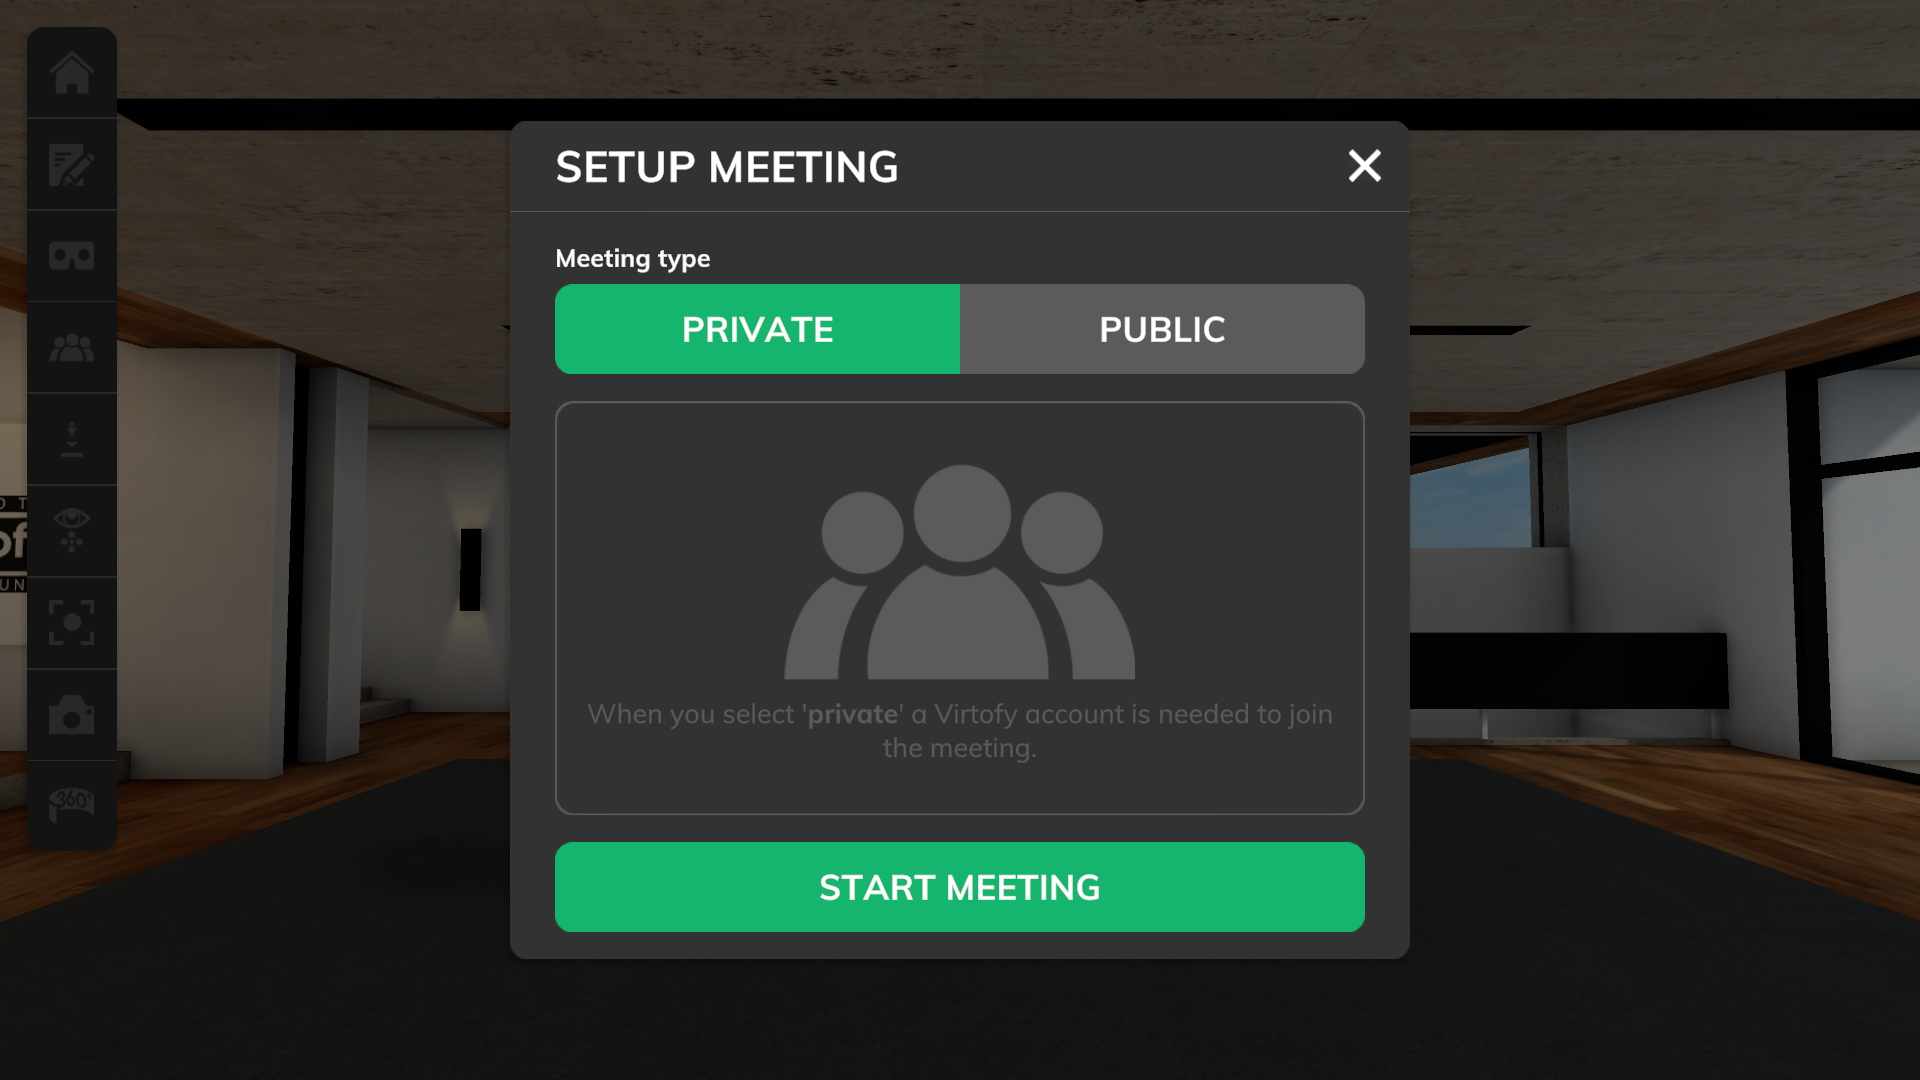 Private meeting setup